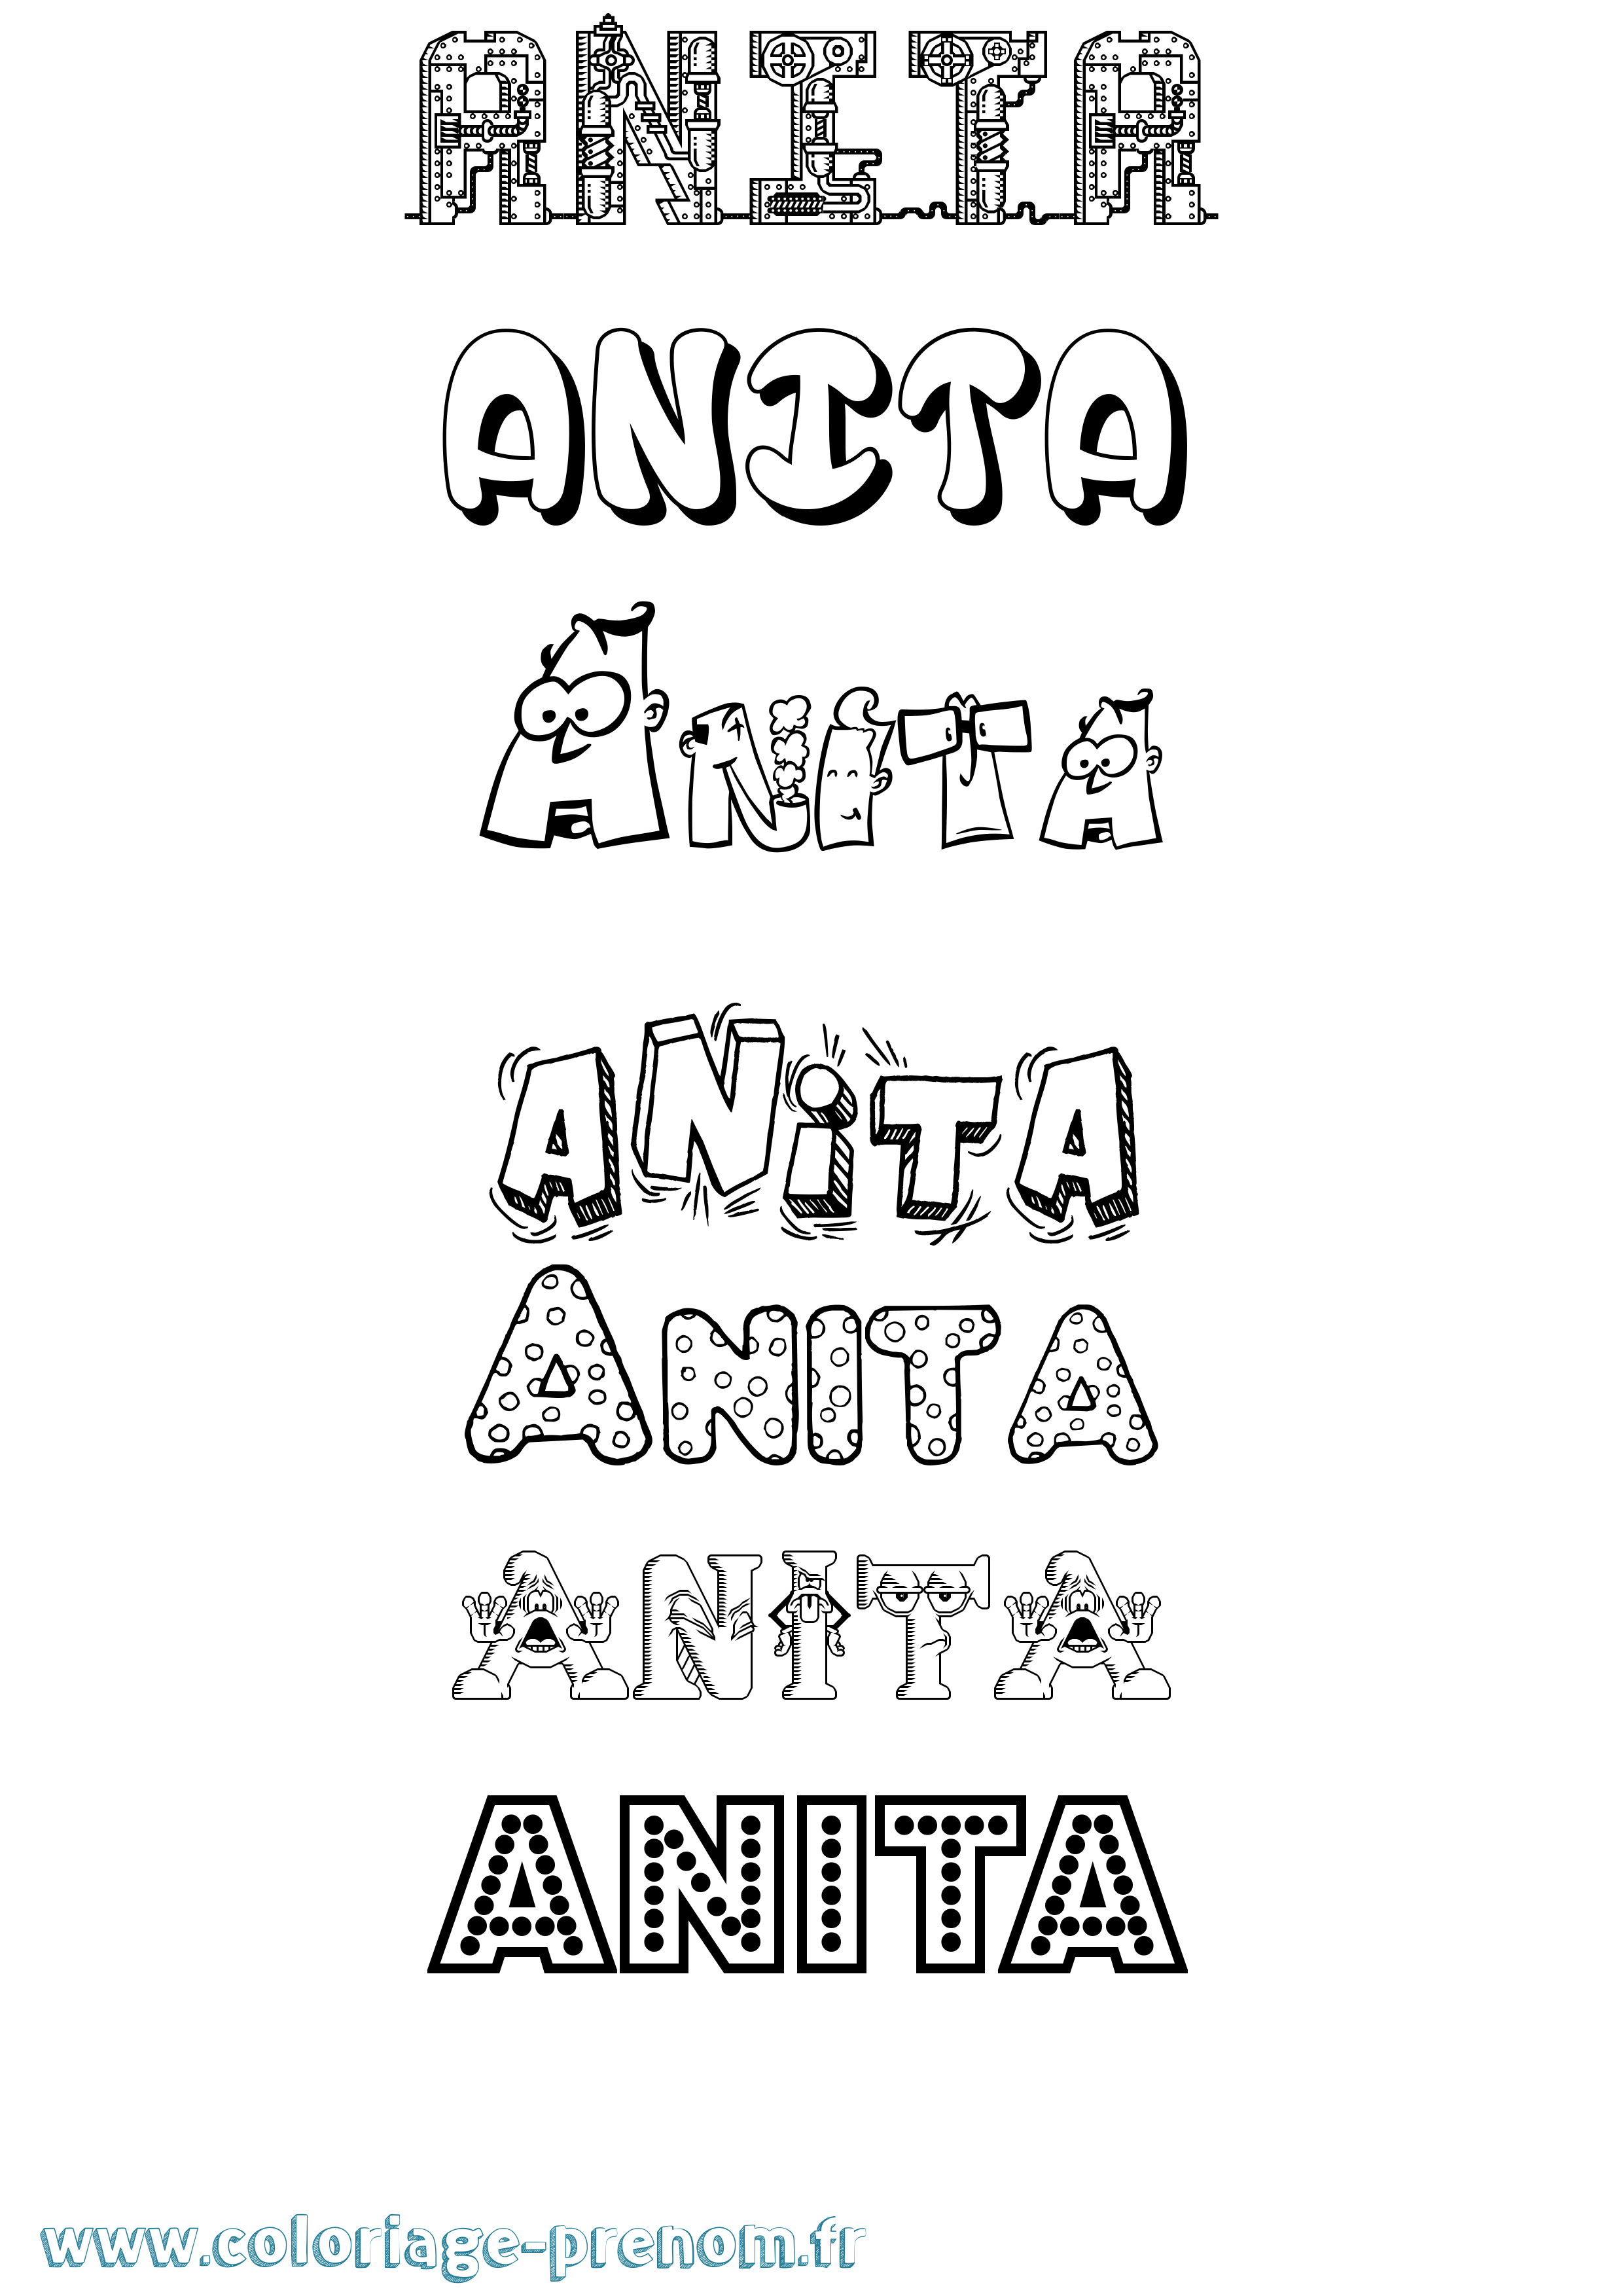 Coloriage prénom Anita